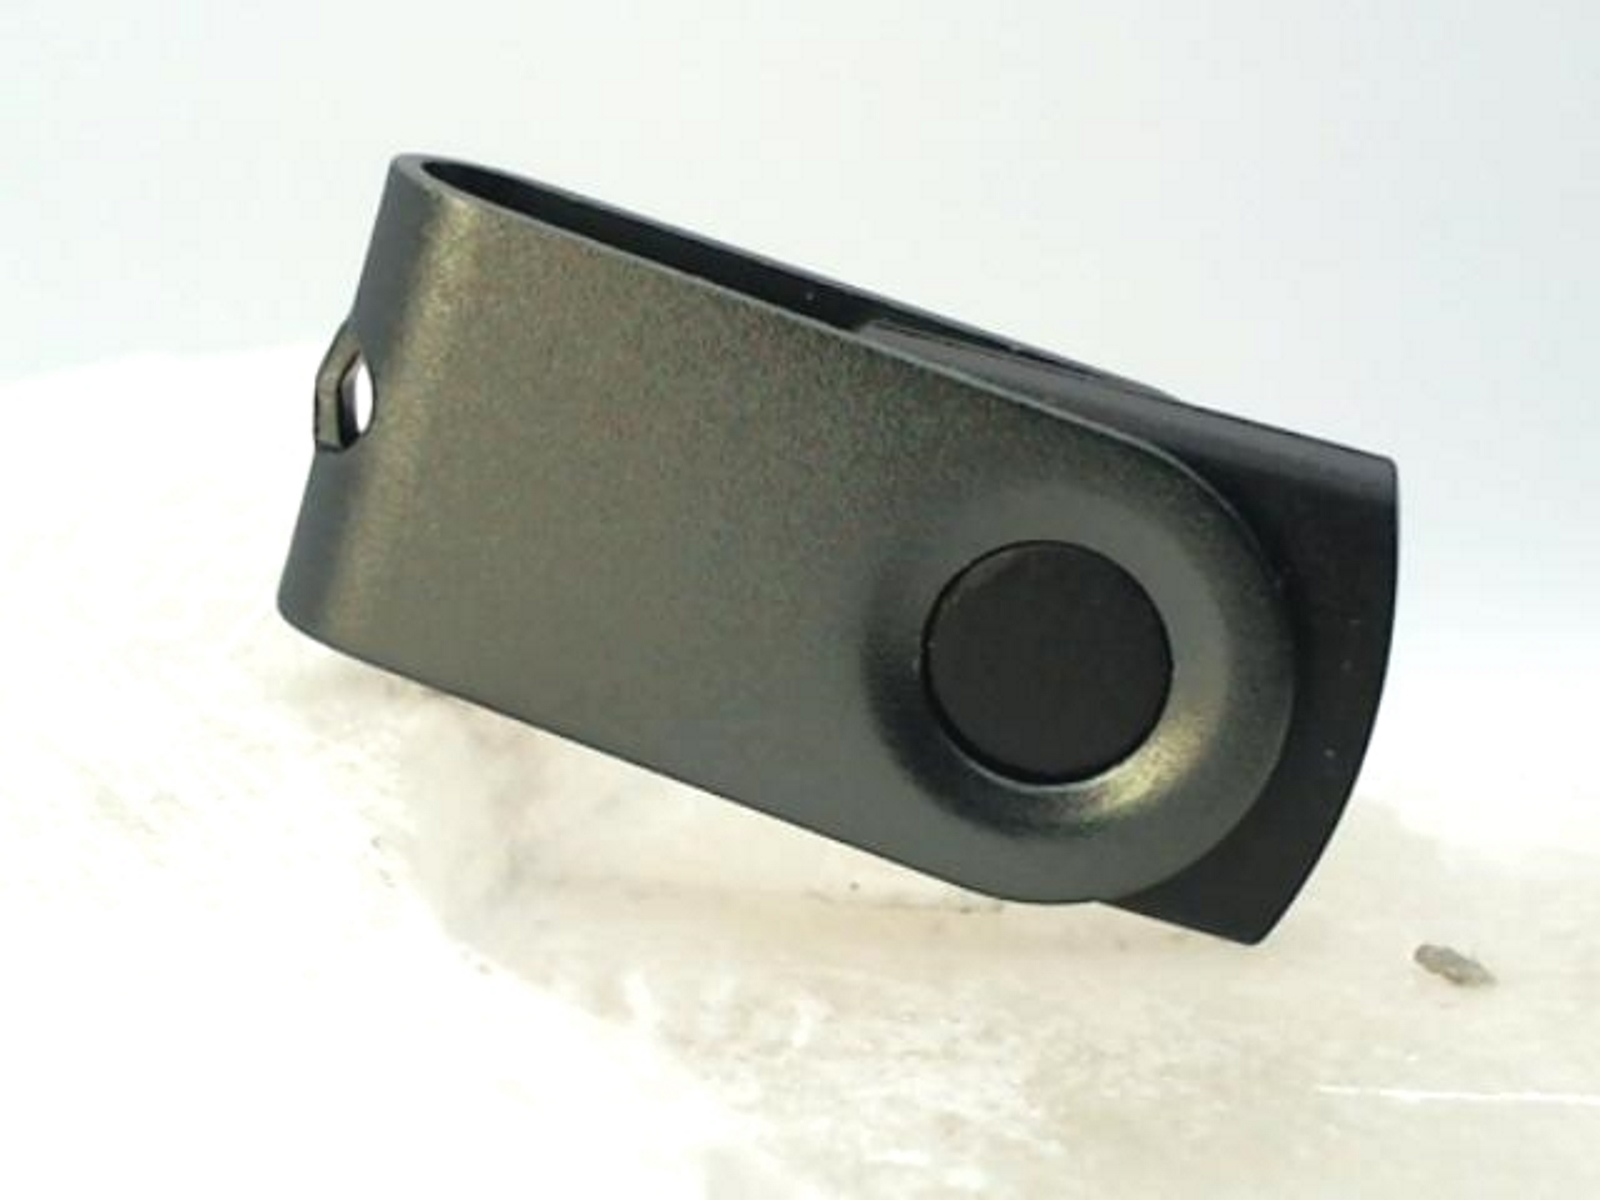 ® USB USB-Stick 1 (Schwarz-Graumetall, GERMANY GB) MINI-SWIVEL